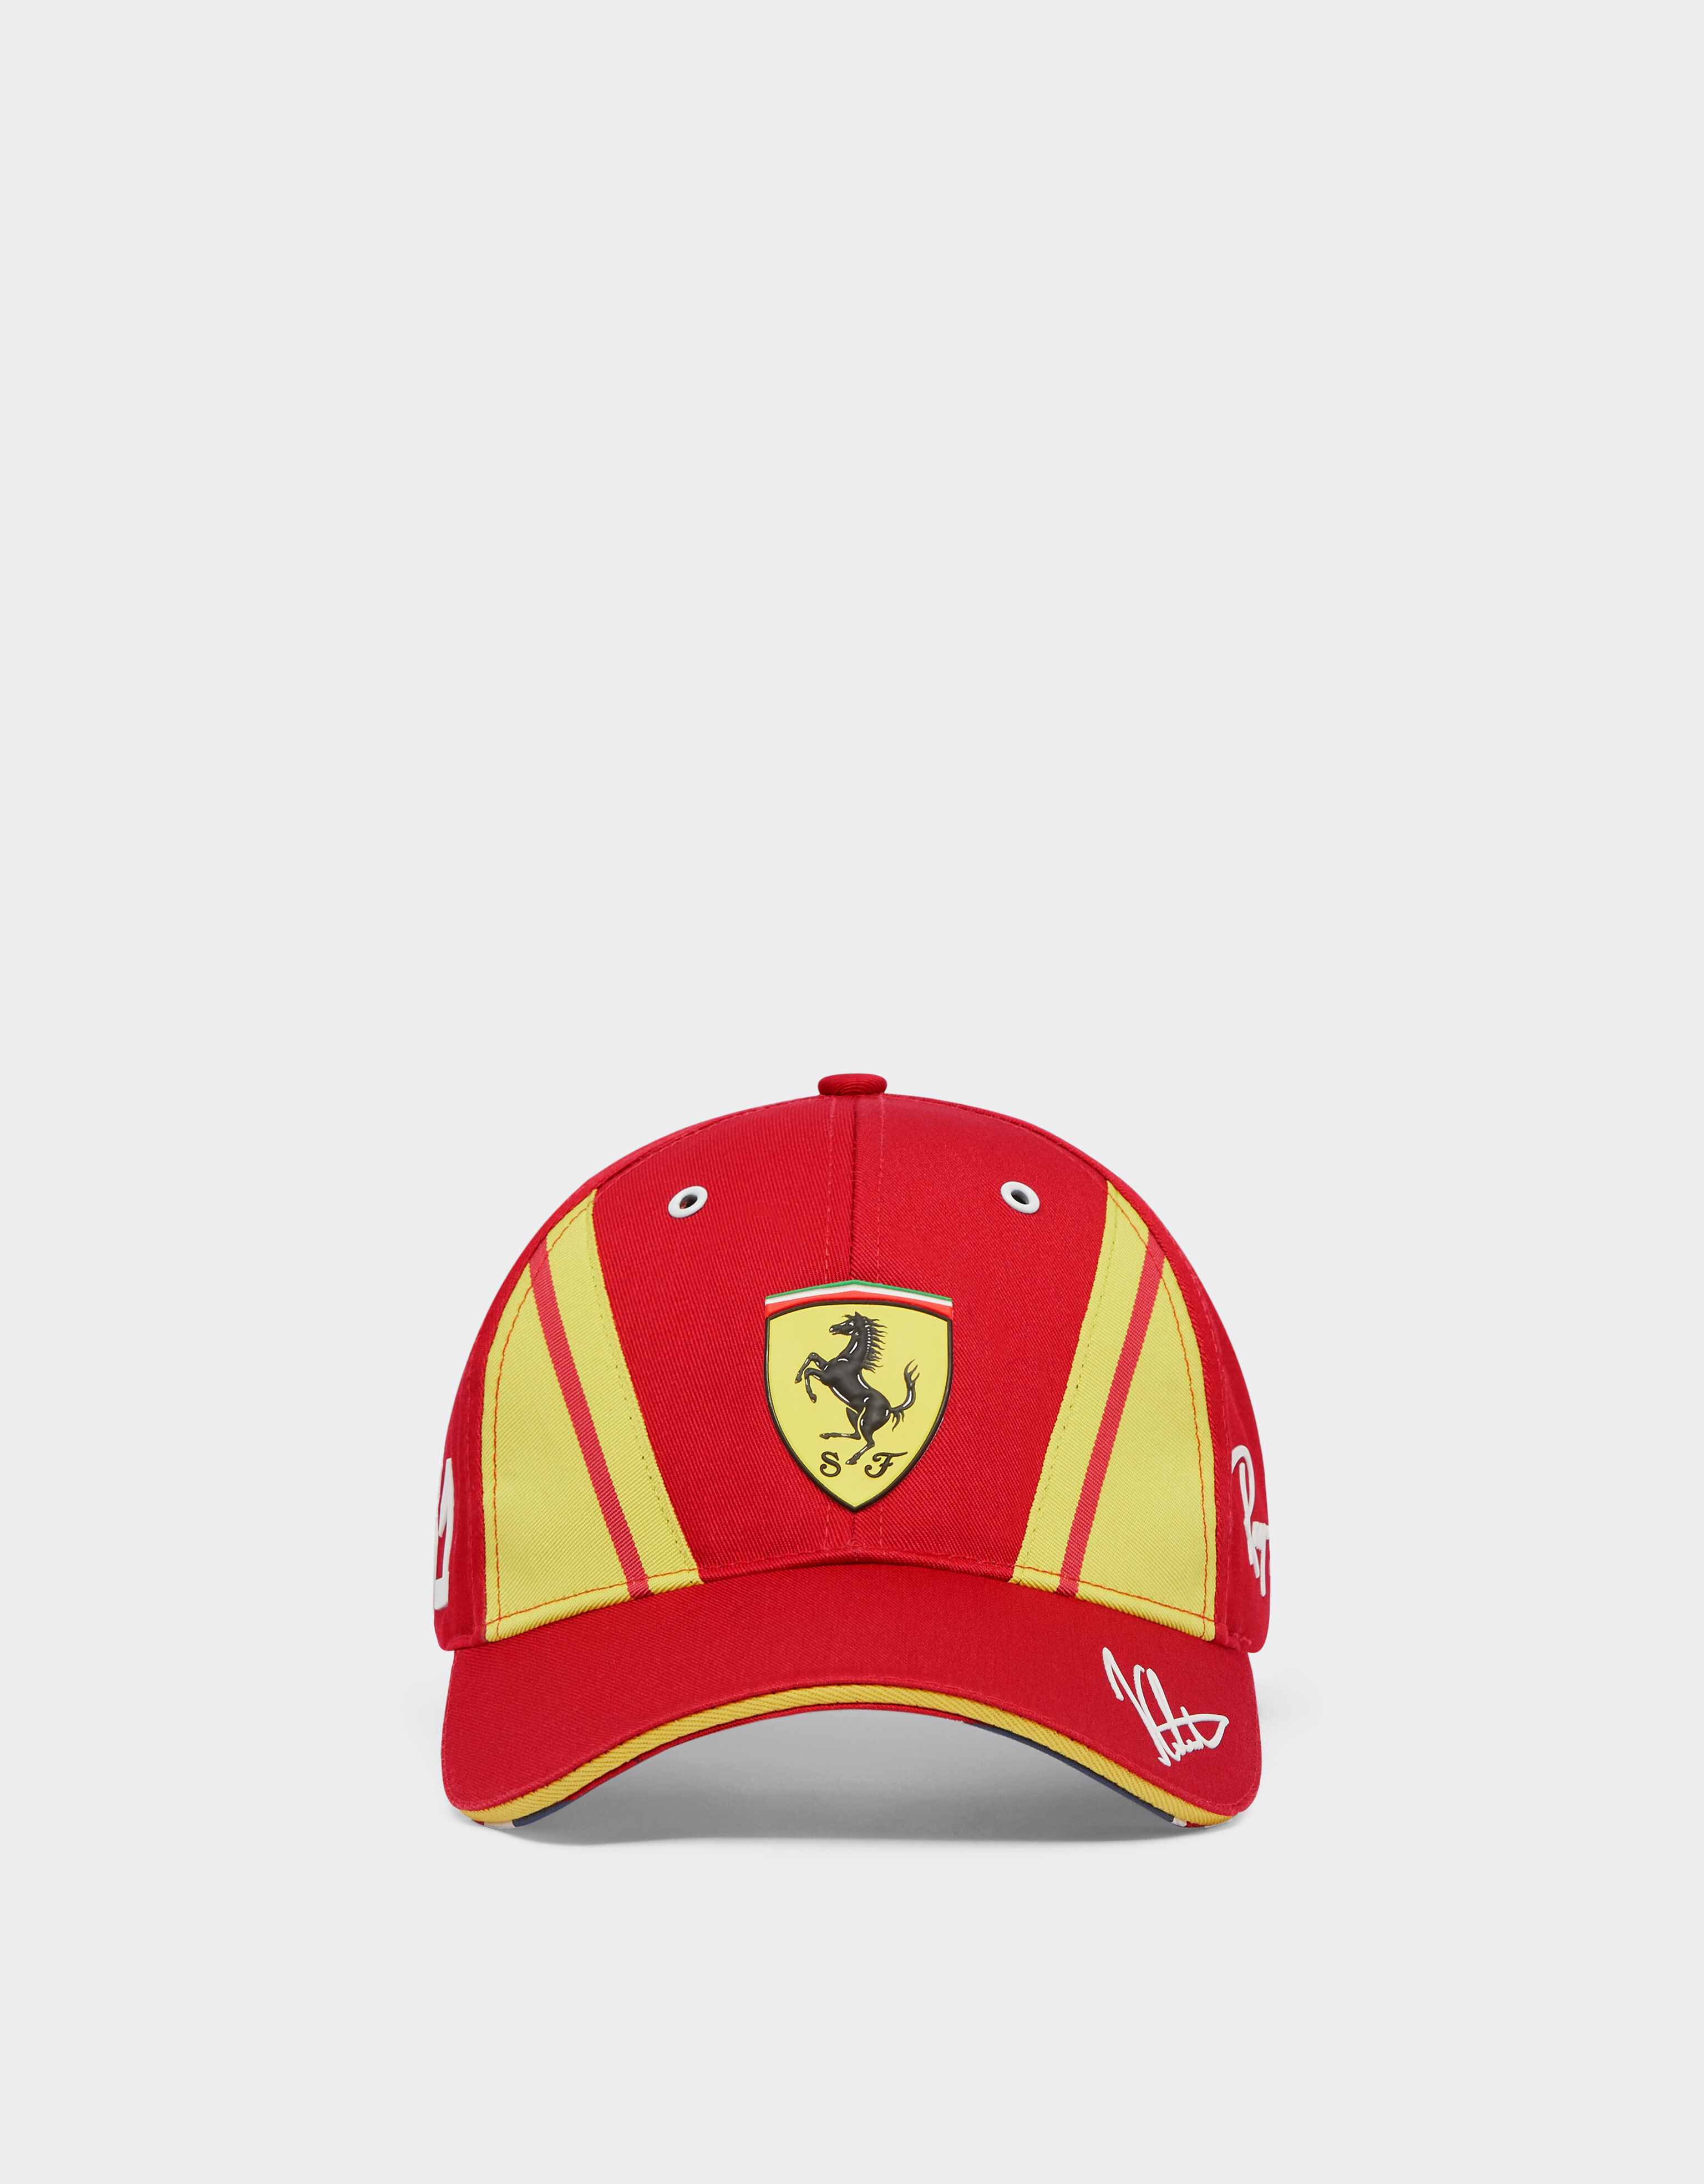 ${brand} Ferrari Calado Hypercar Hat - Limited Edition ${colorDescription} ${masterID}